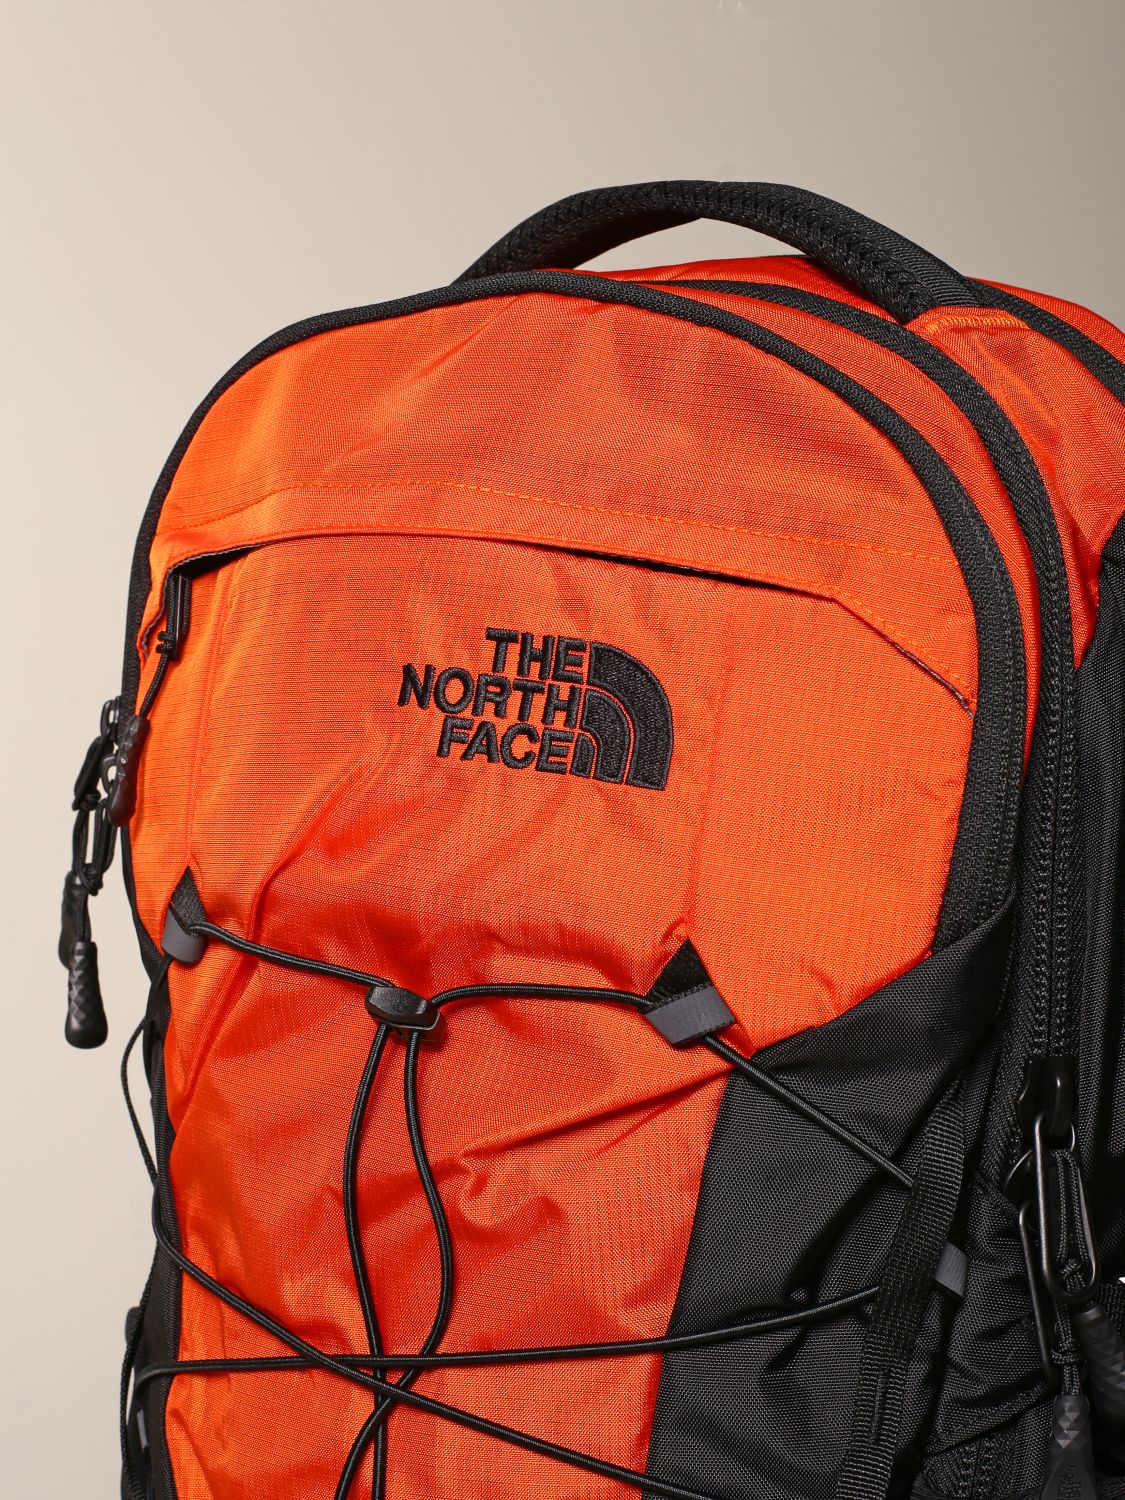 Bags men The North Face | Backpack The North Face Men Orange | Backpack